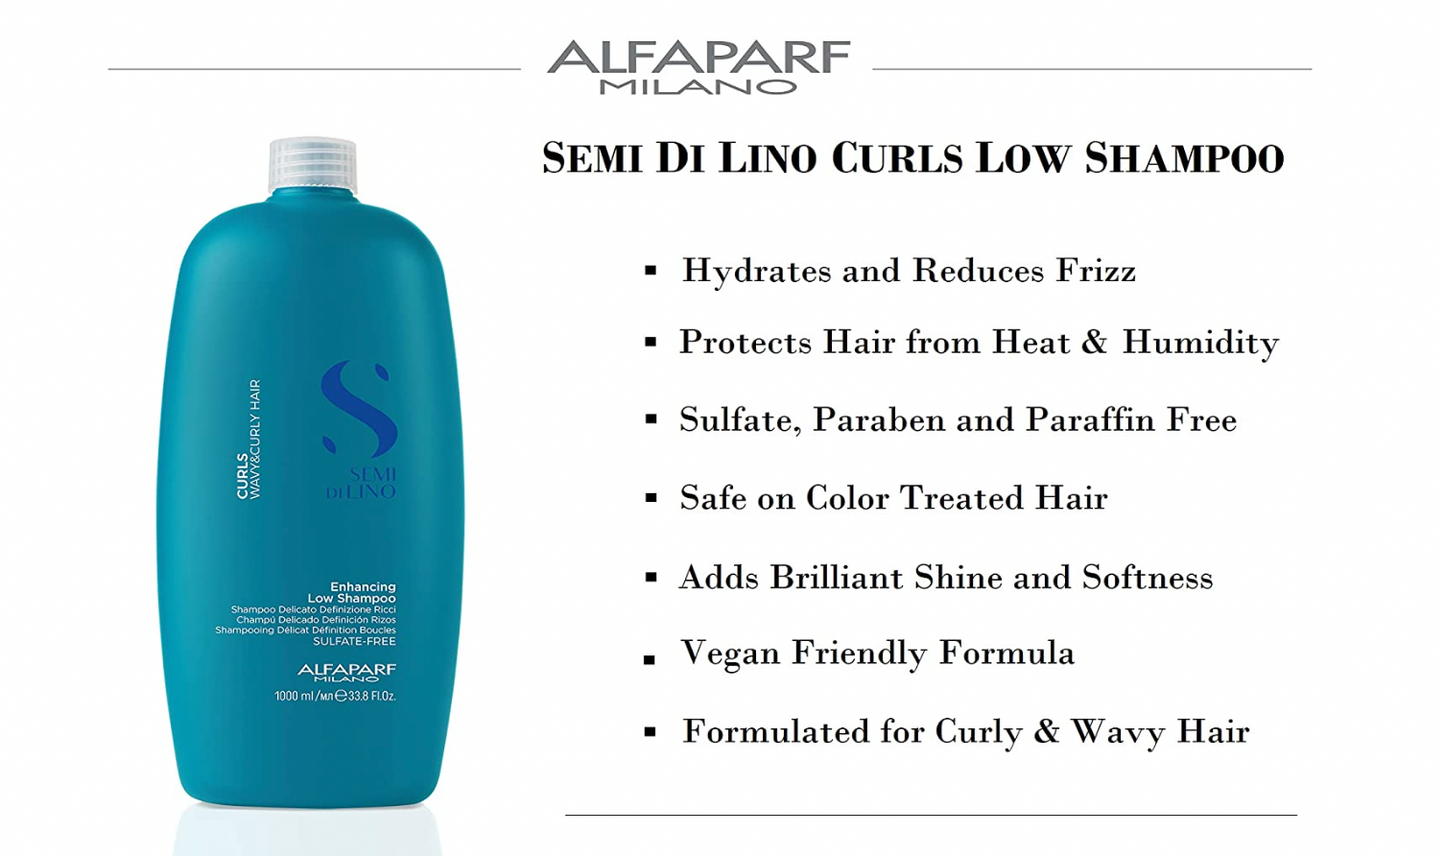 ALFAPARF MILANO SEMI DI LINO Enhancing Low Shampoo Curls Wavy & Curly Hair 1000ml